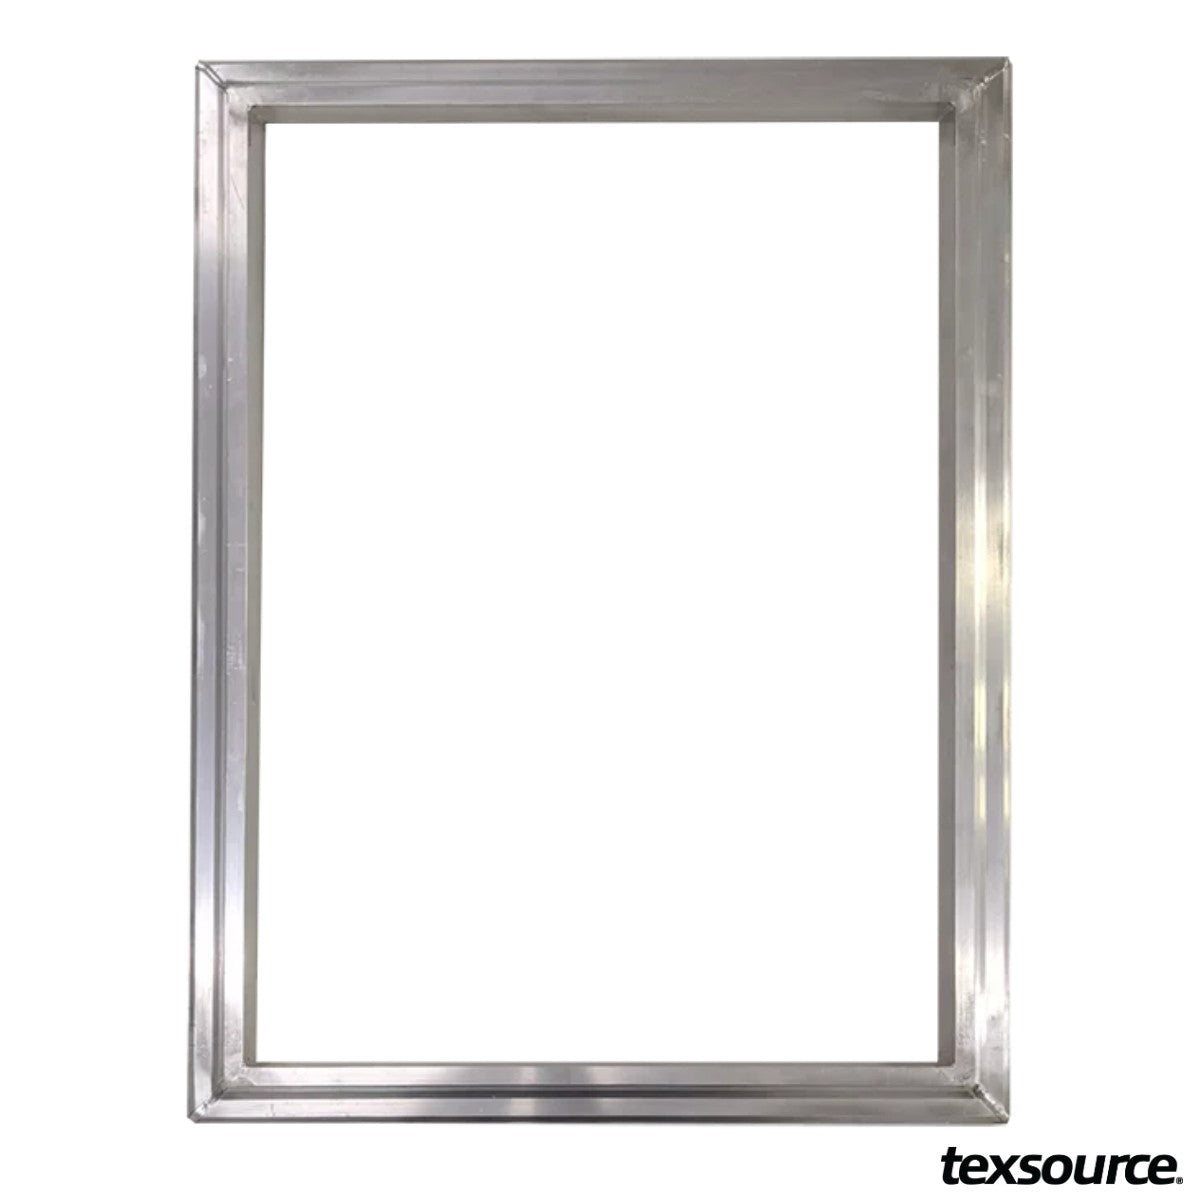 23 X 31 Aluminum Frame (Murakami S-Mesh) - Spot Color Supply